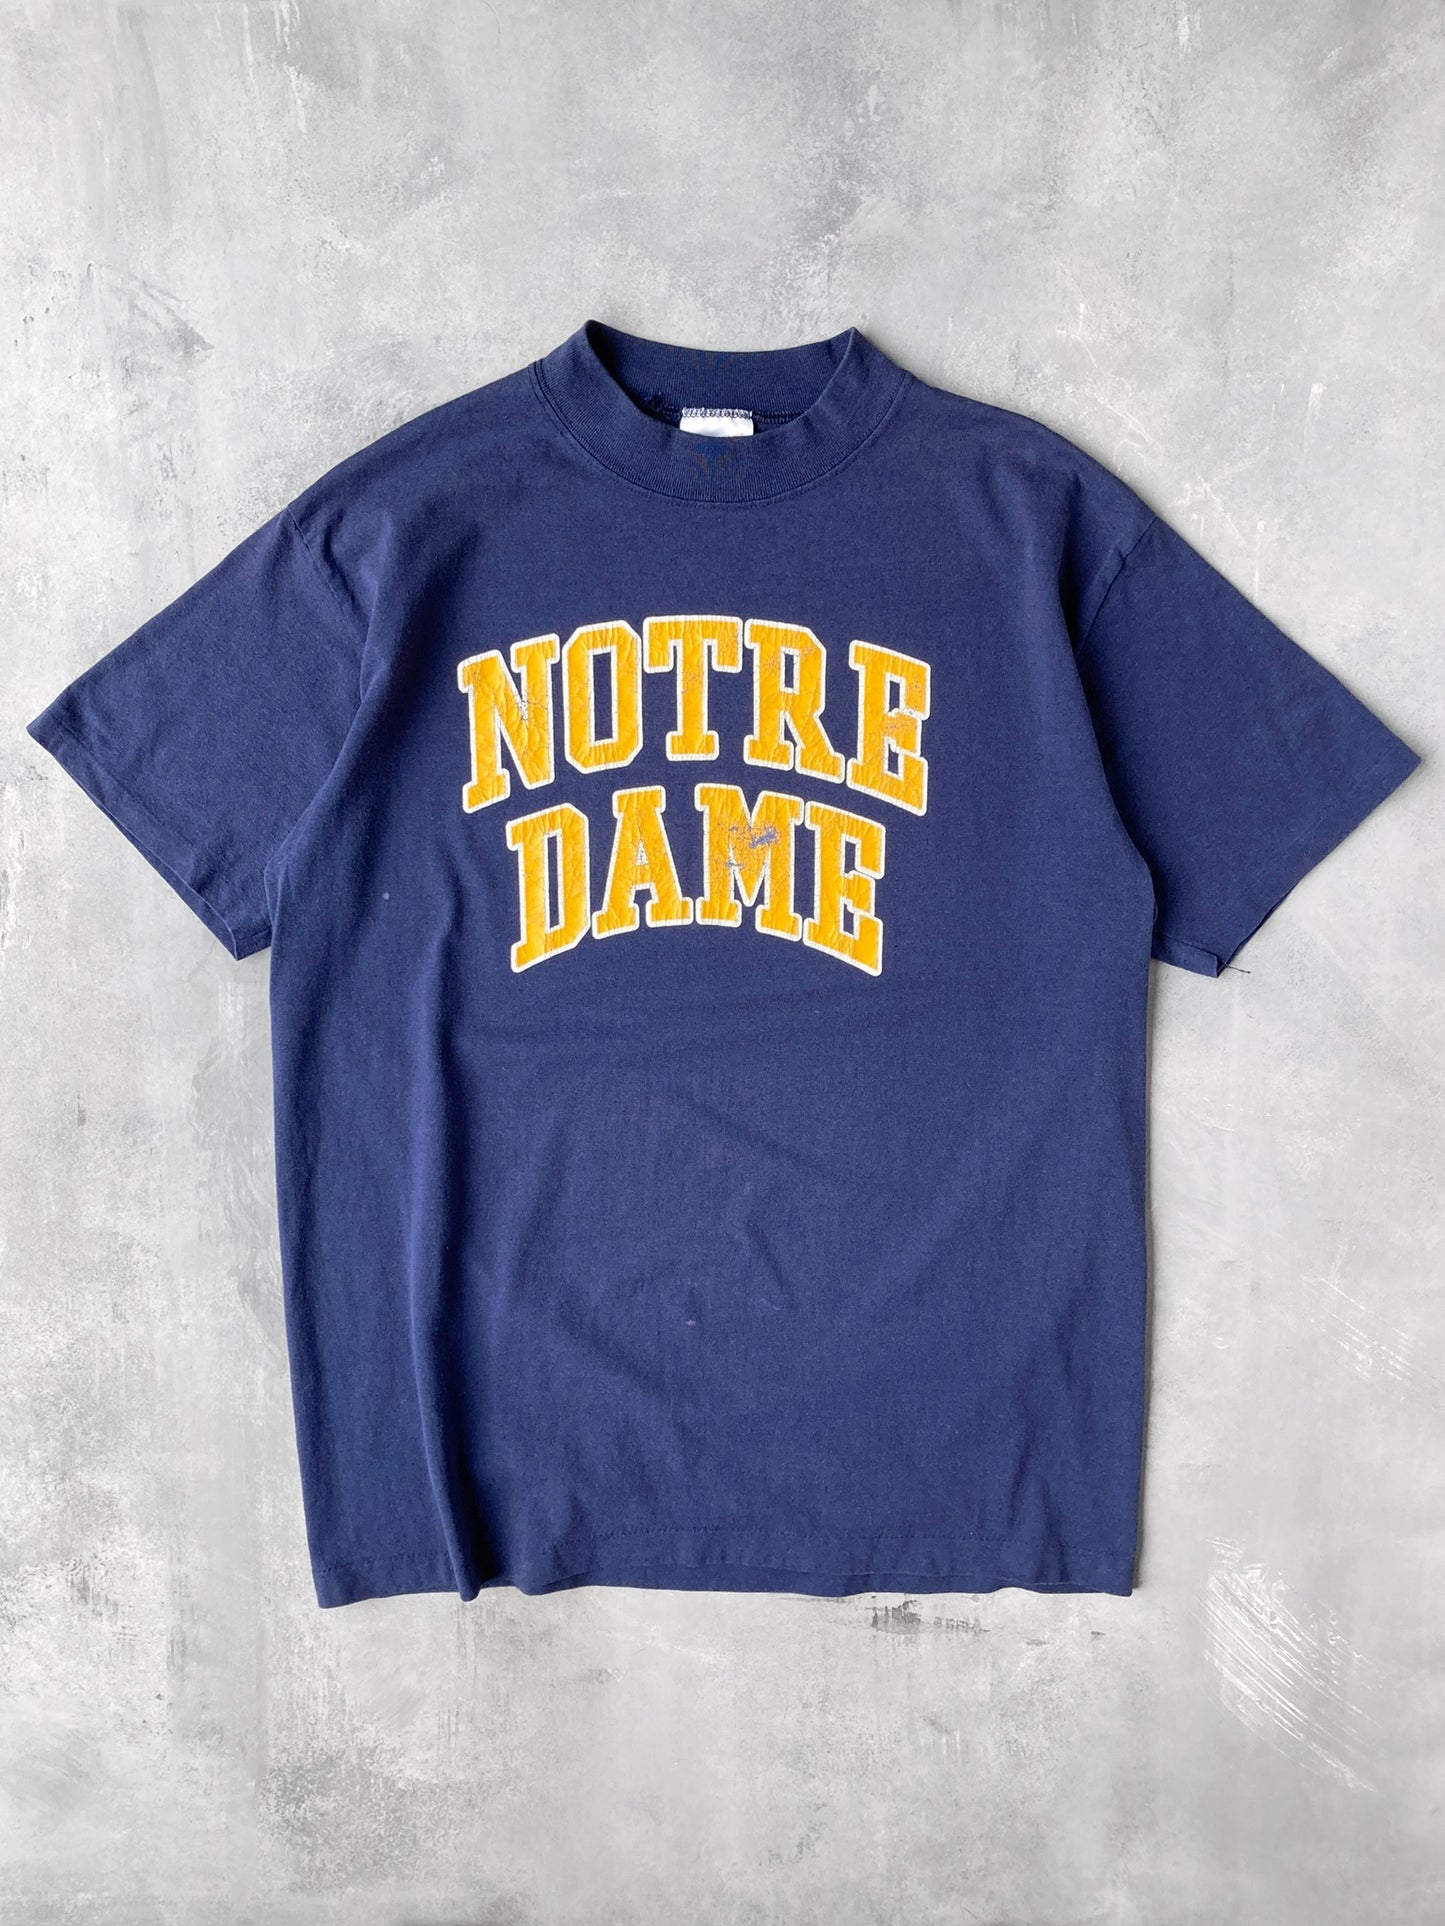 Notre Dame University T-Shirt 80's - Large